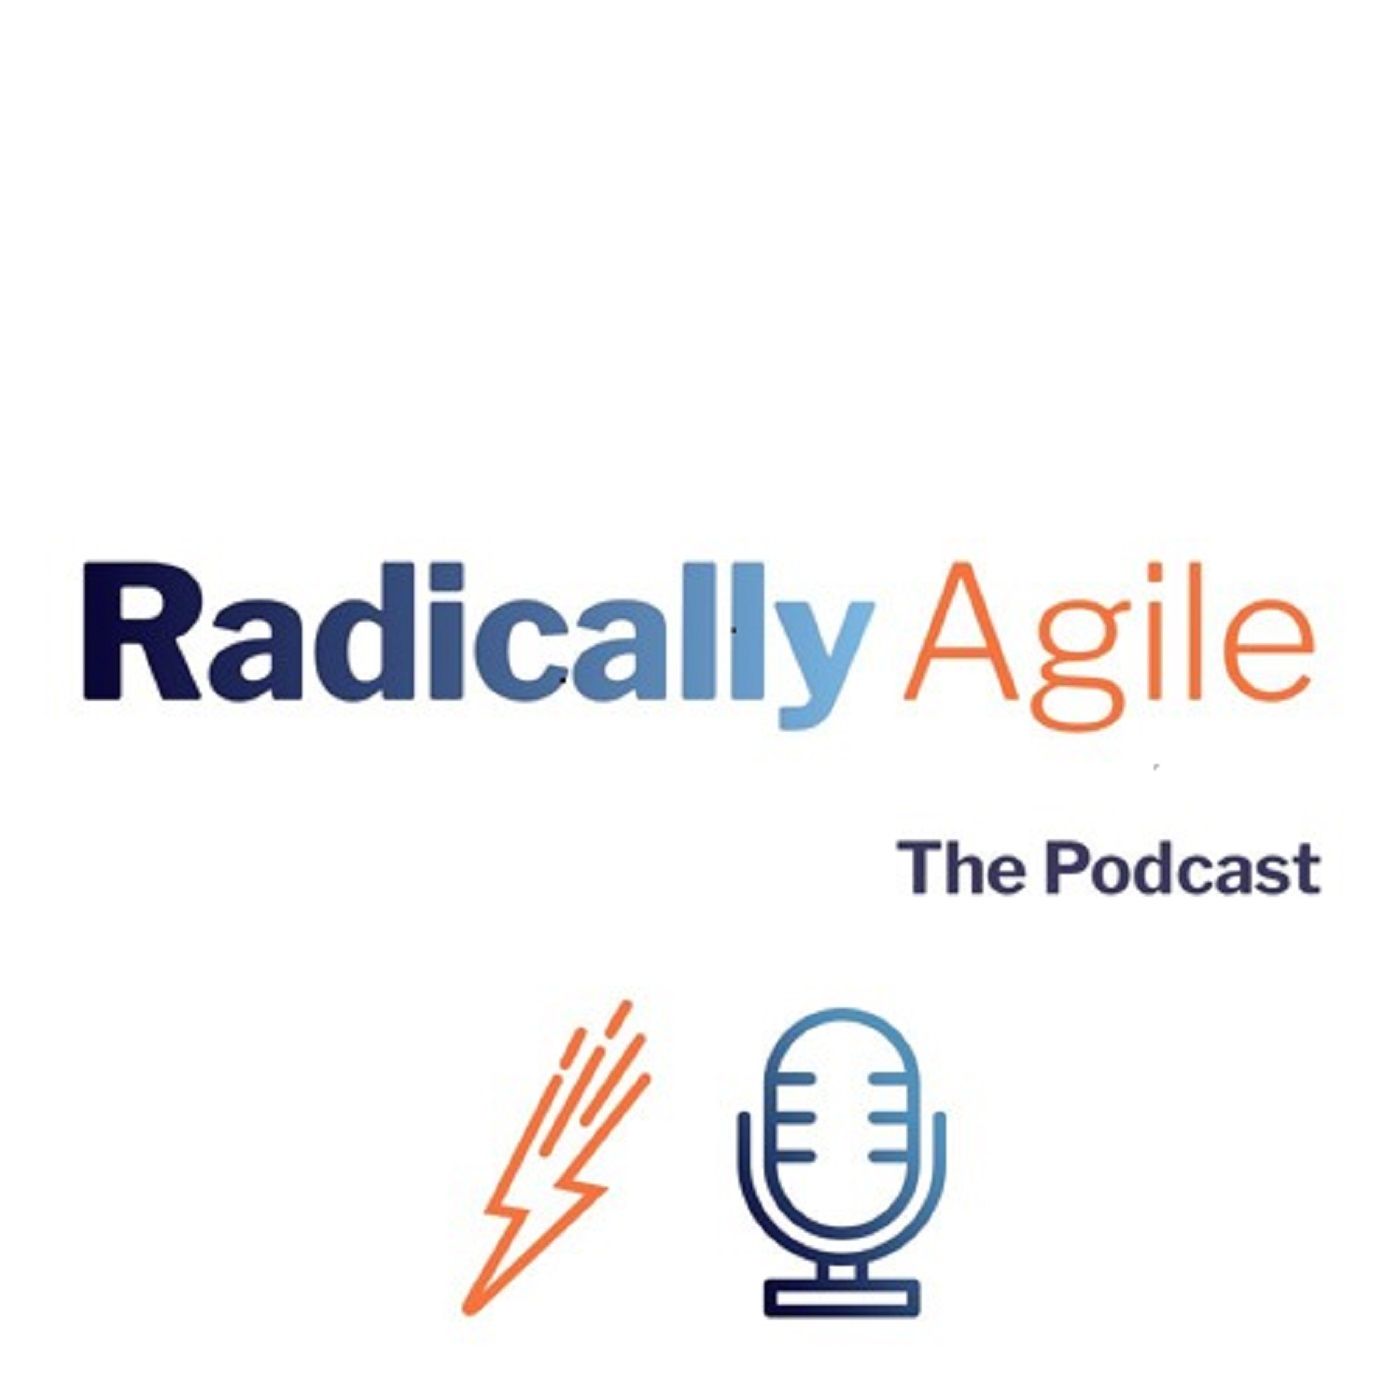 Radically Agile: The Podcast